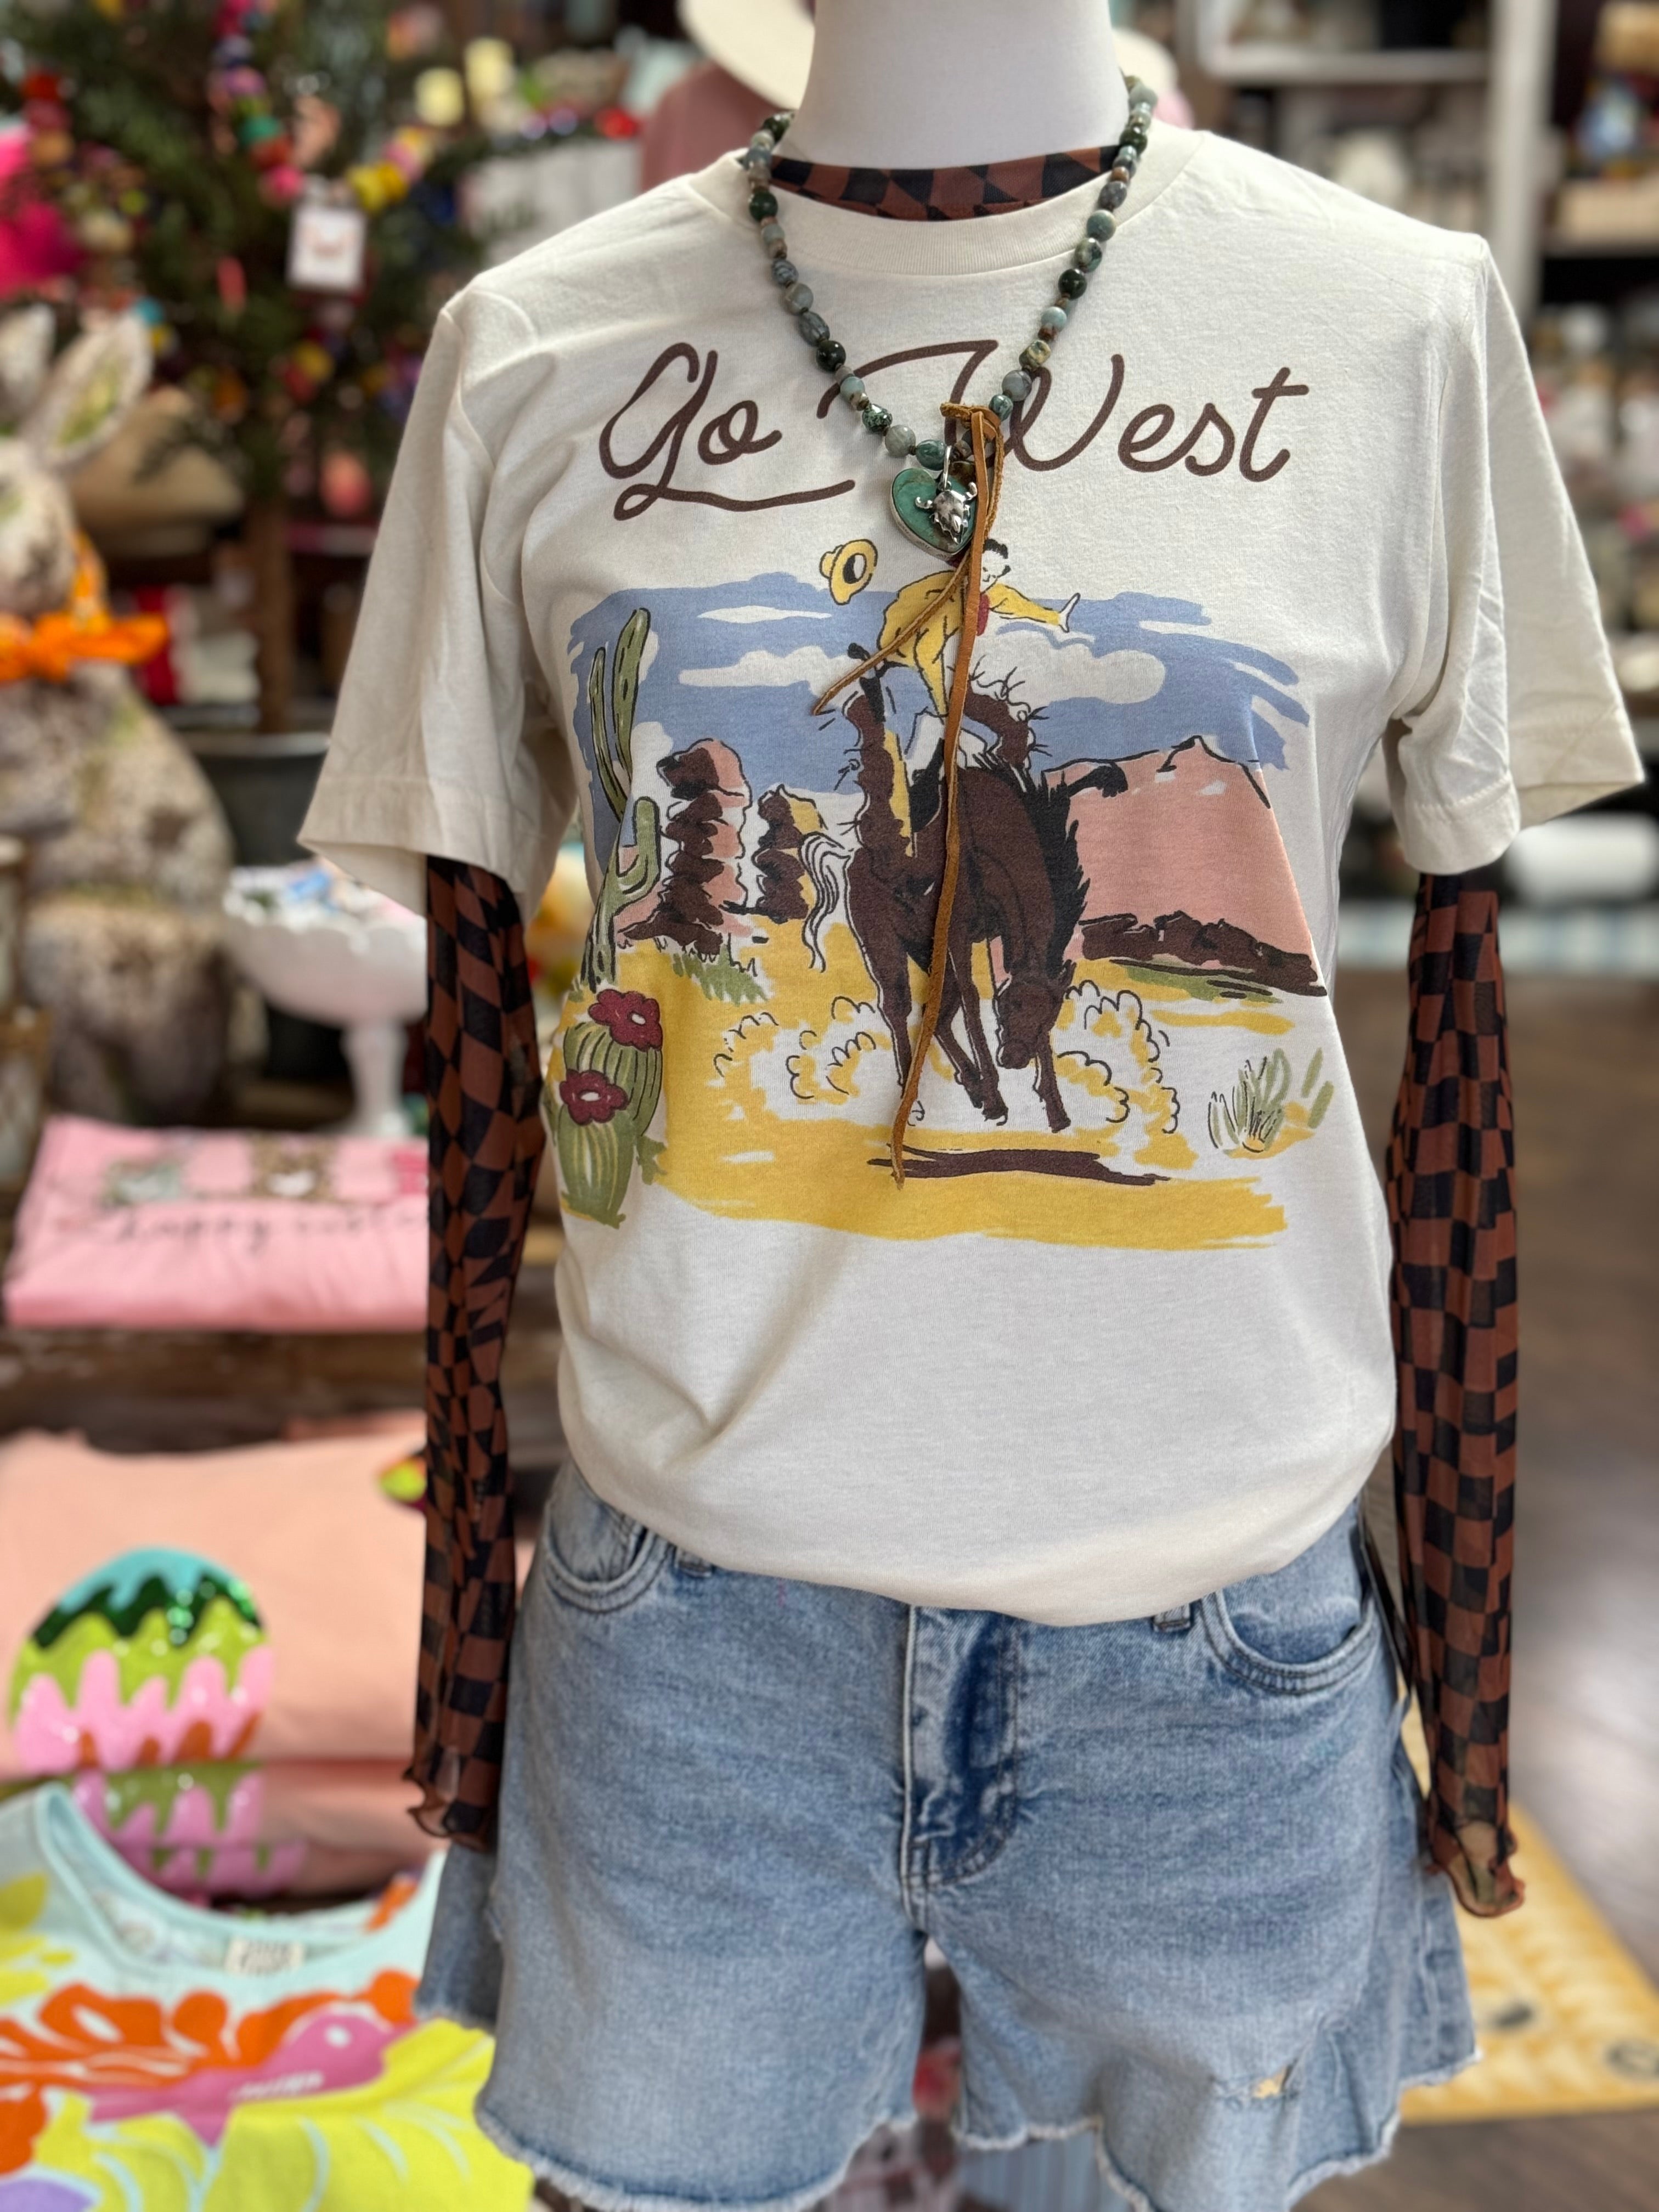 Let’s Go West Tee